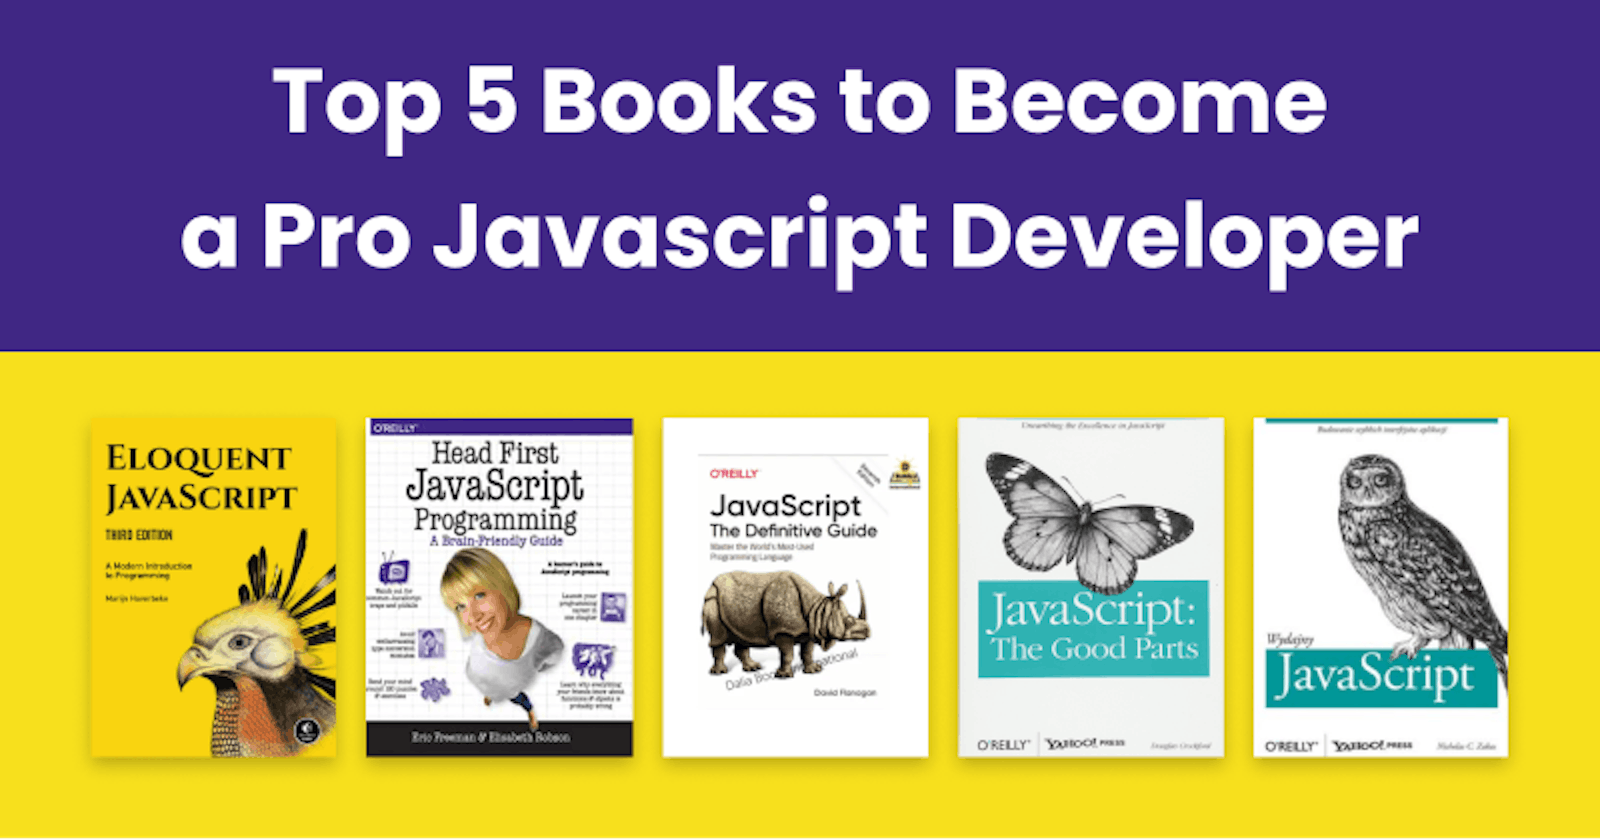 Top 5 Books to Become a Pro Javascript Developer